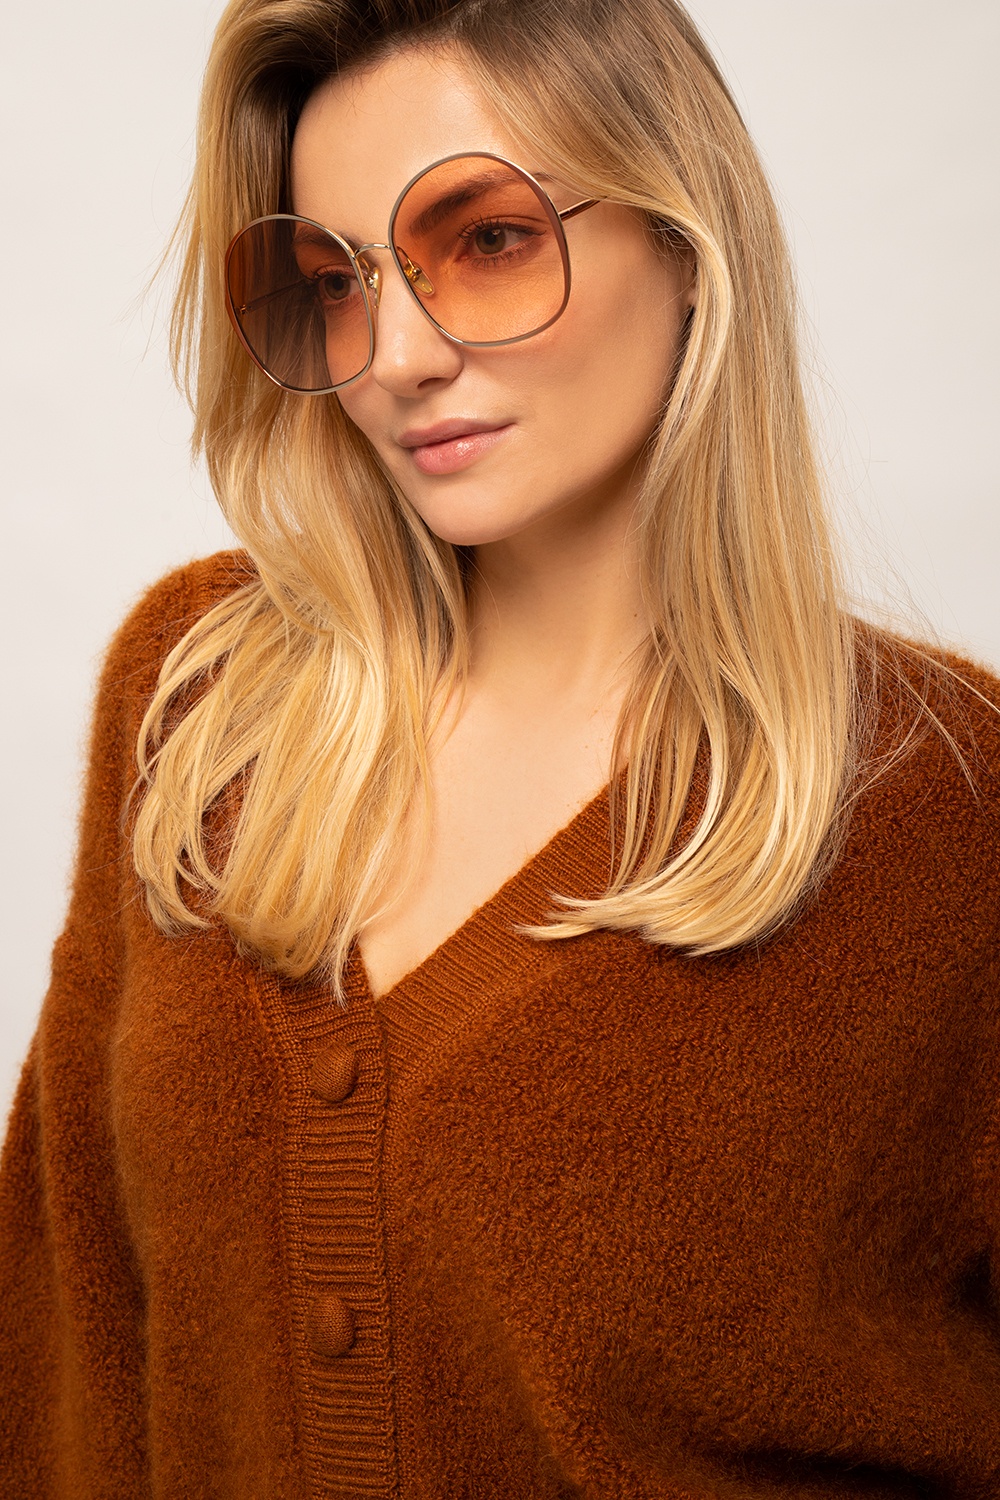 Chloé overrectangular sunglasses